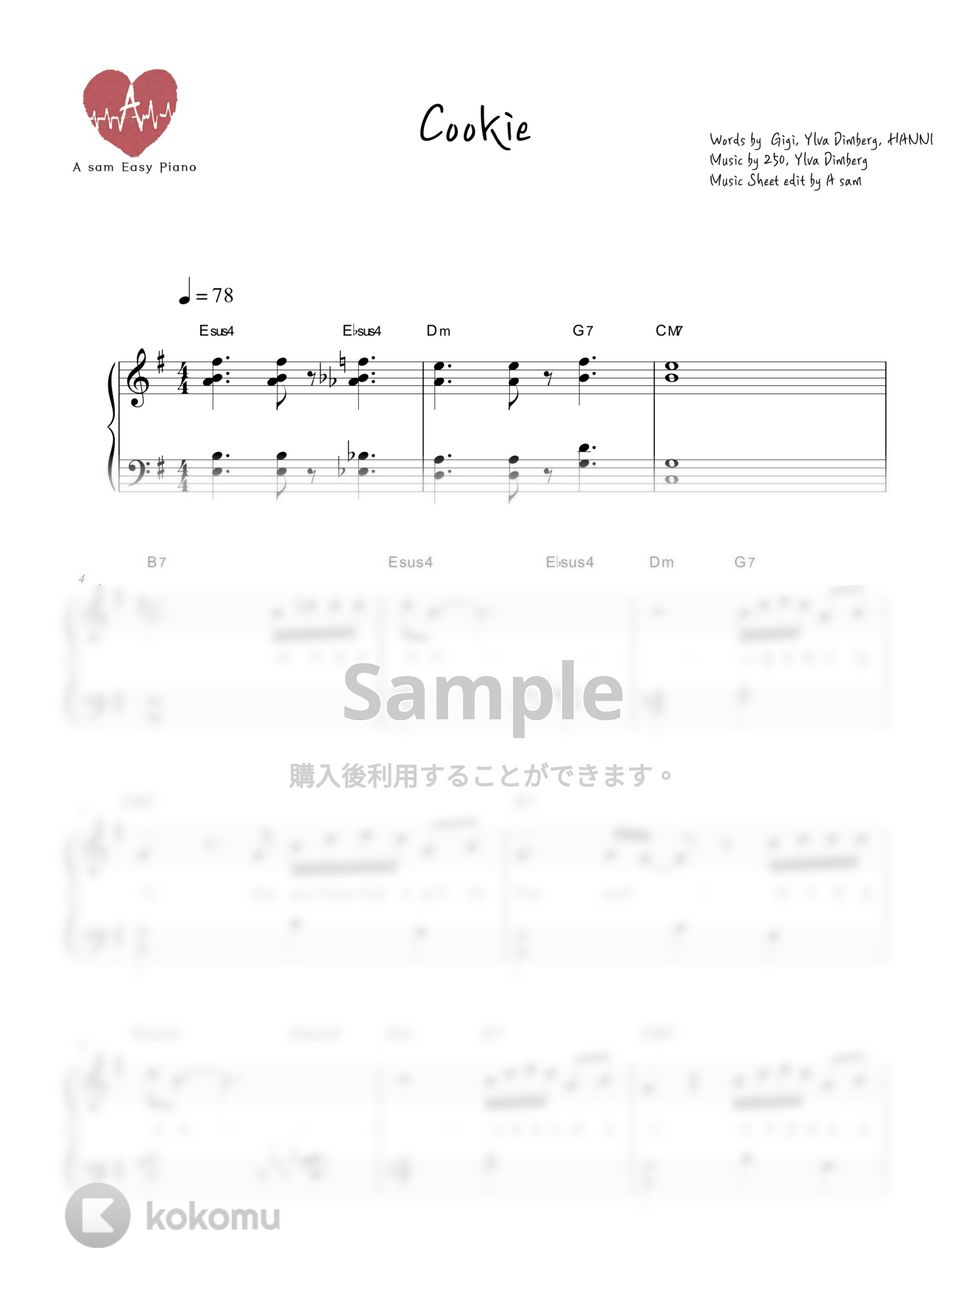 NewJeans(ニュージーンズ) - Cookie (ピアノ両手 / 中級) by A-sam